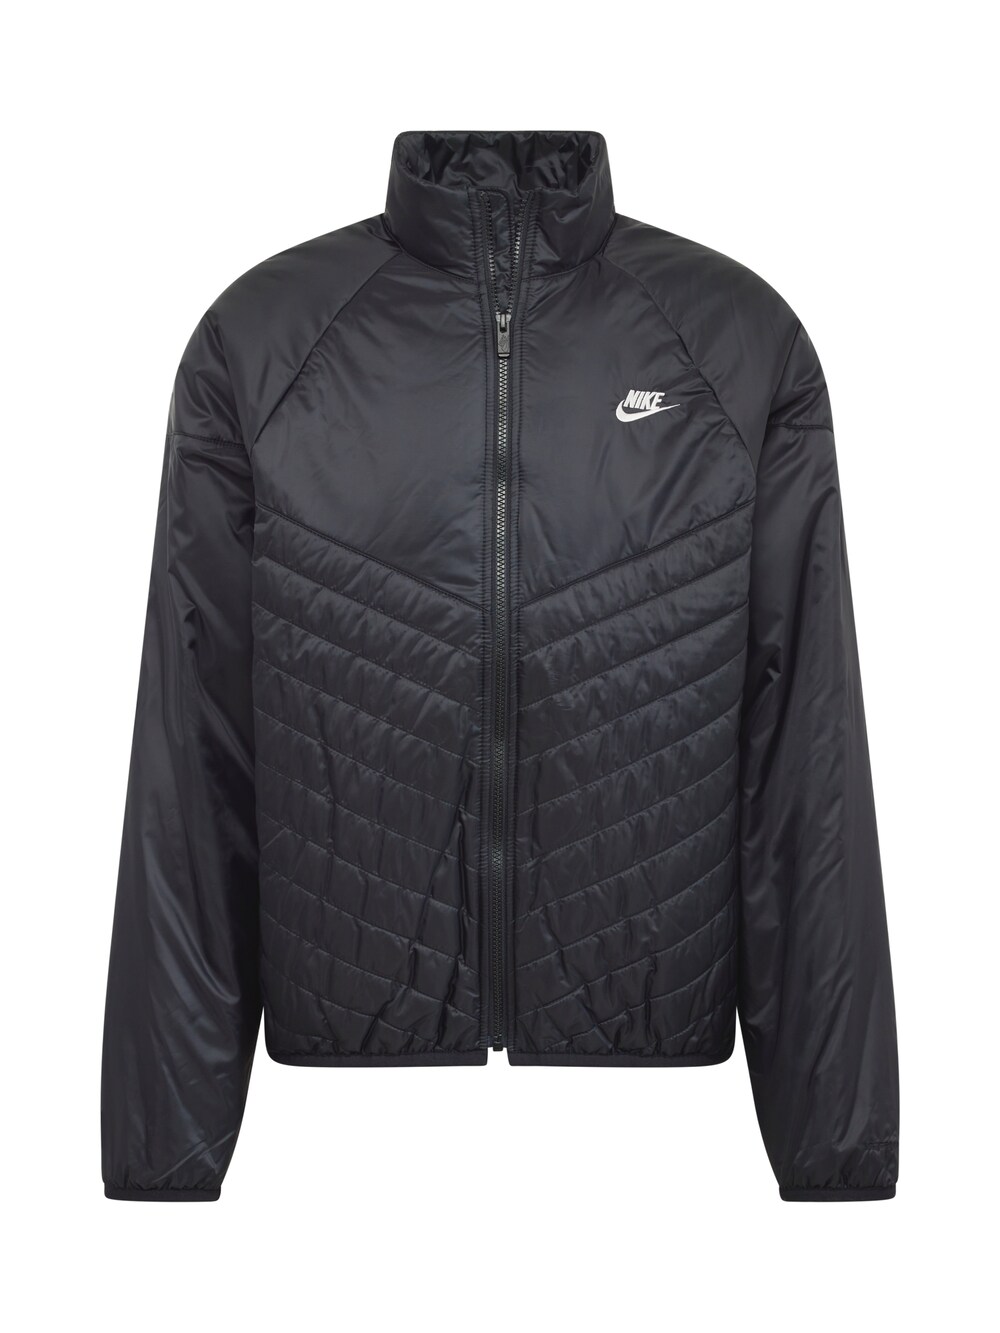 Межсезонная куртка Nike Sportswear, черный межсезонная куртка nike белый